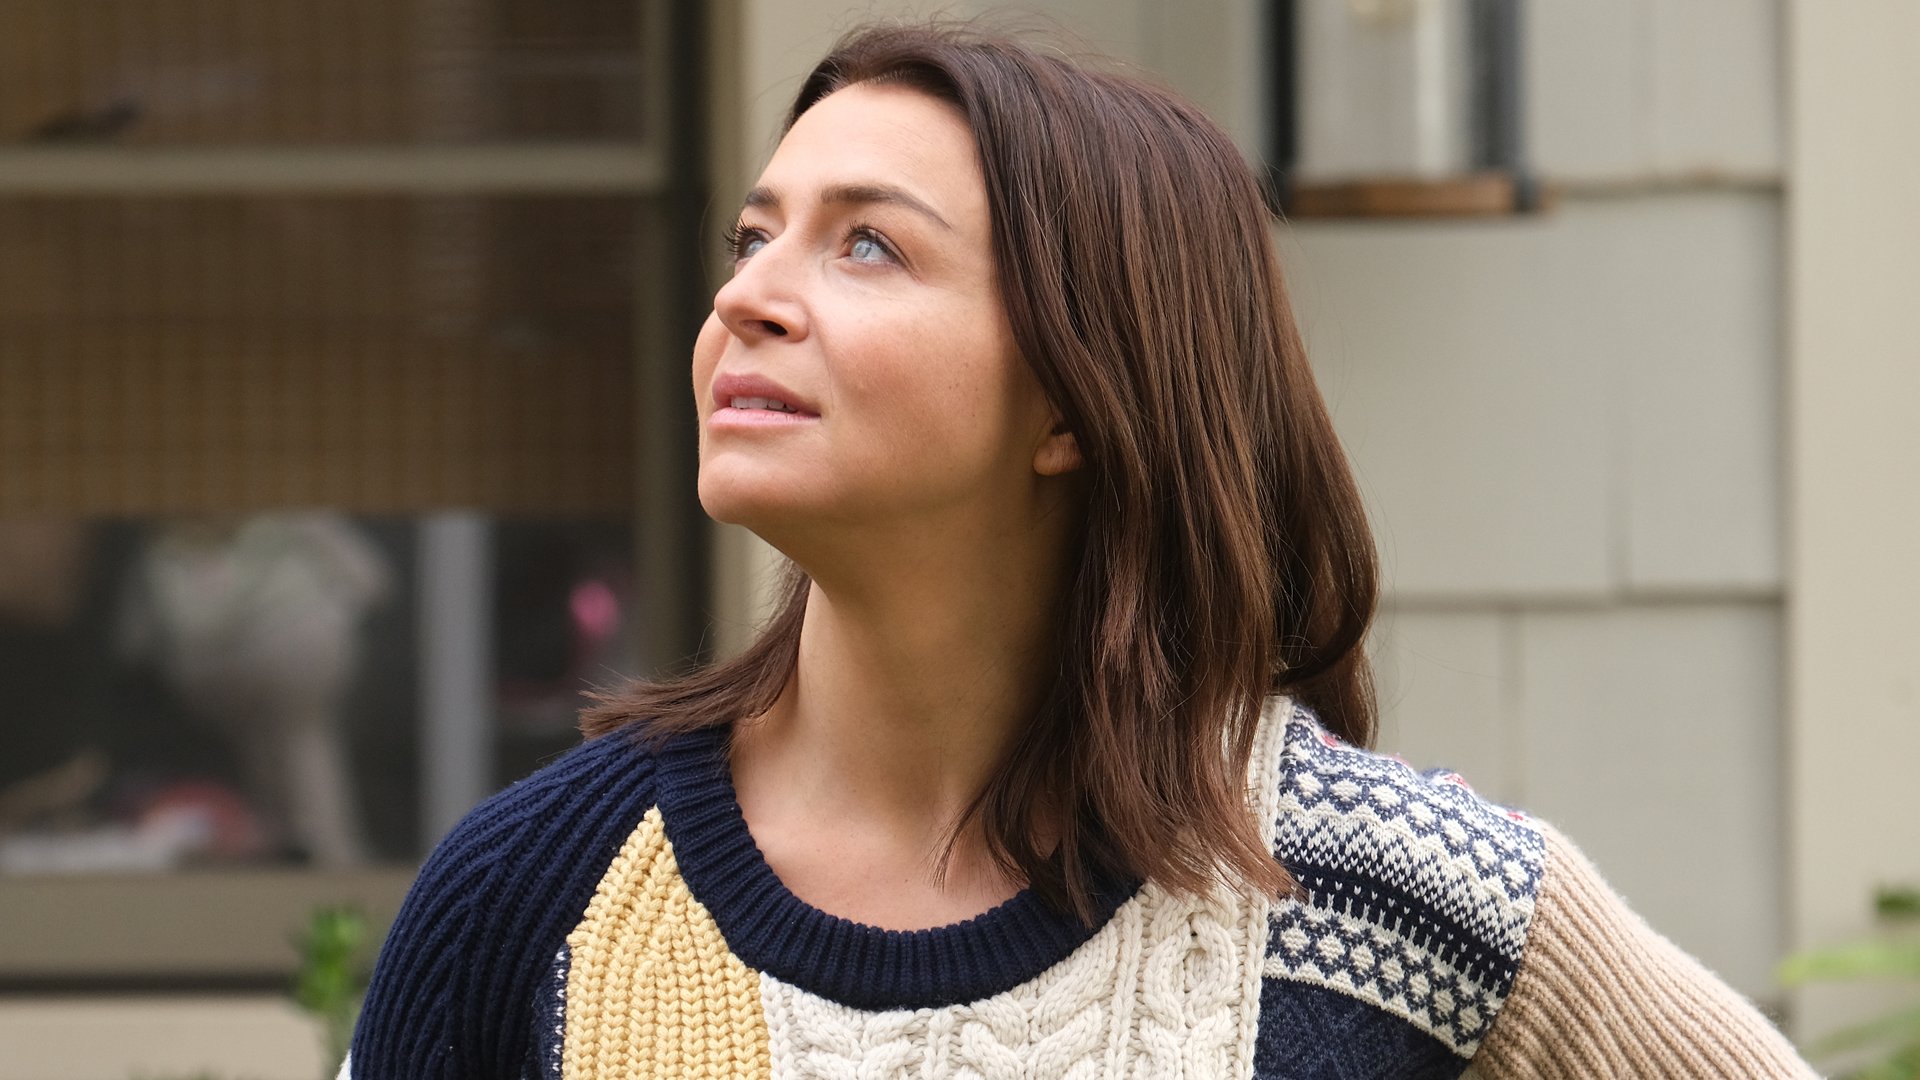 Caterina Scorsone as Amelia Shepherd looking up in 'Grey's Anatomy' Season 17 Episode 7 